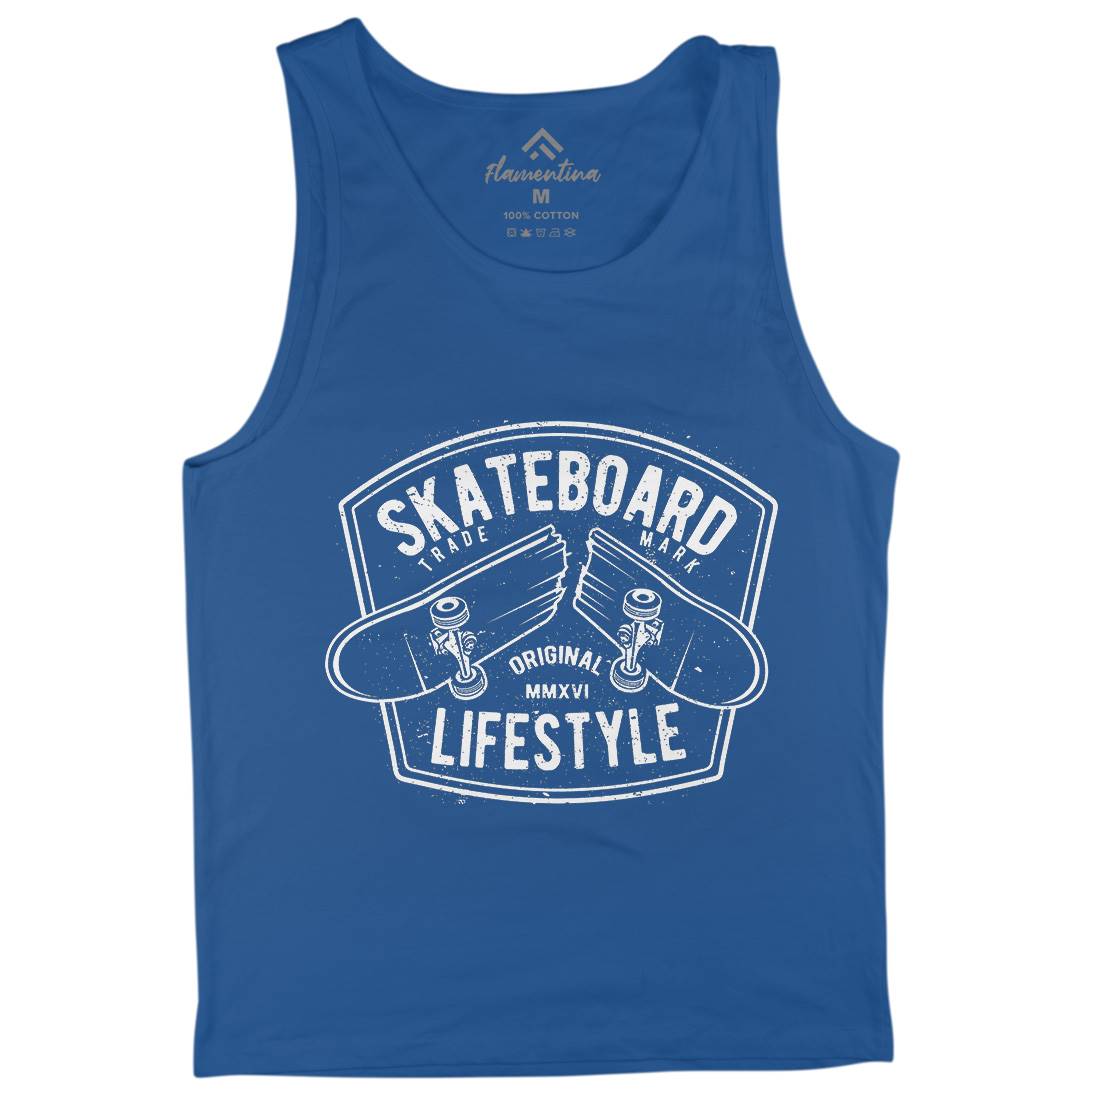 Skateboard Lifestyle Mens Tank Top Vest Skate A145